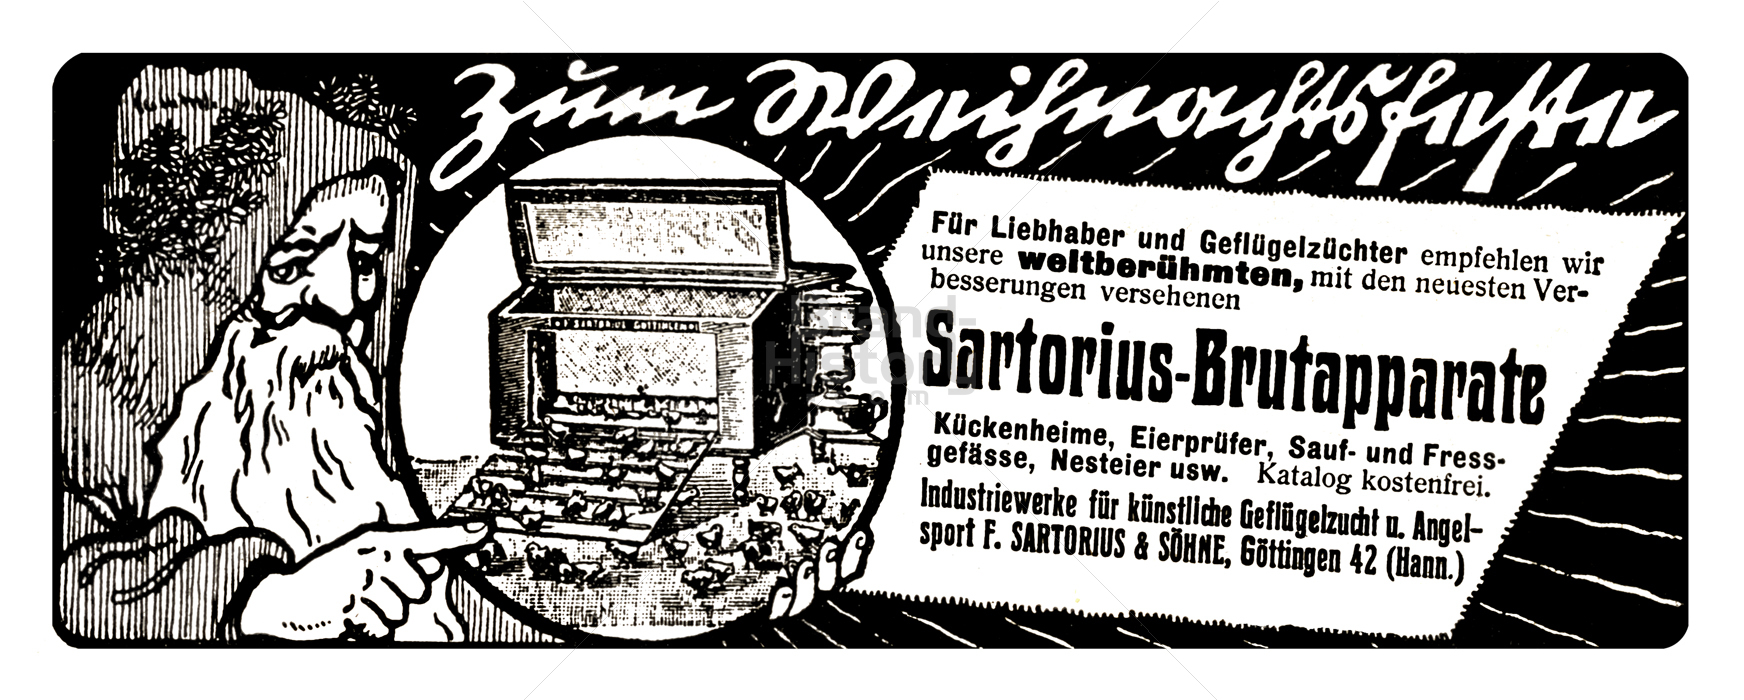 F. SARTORIUS & SÖHNE, Göttingen